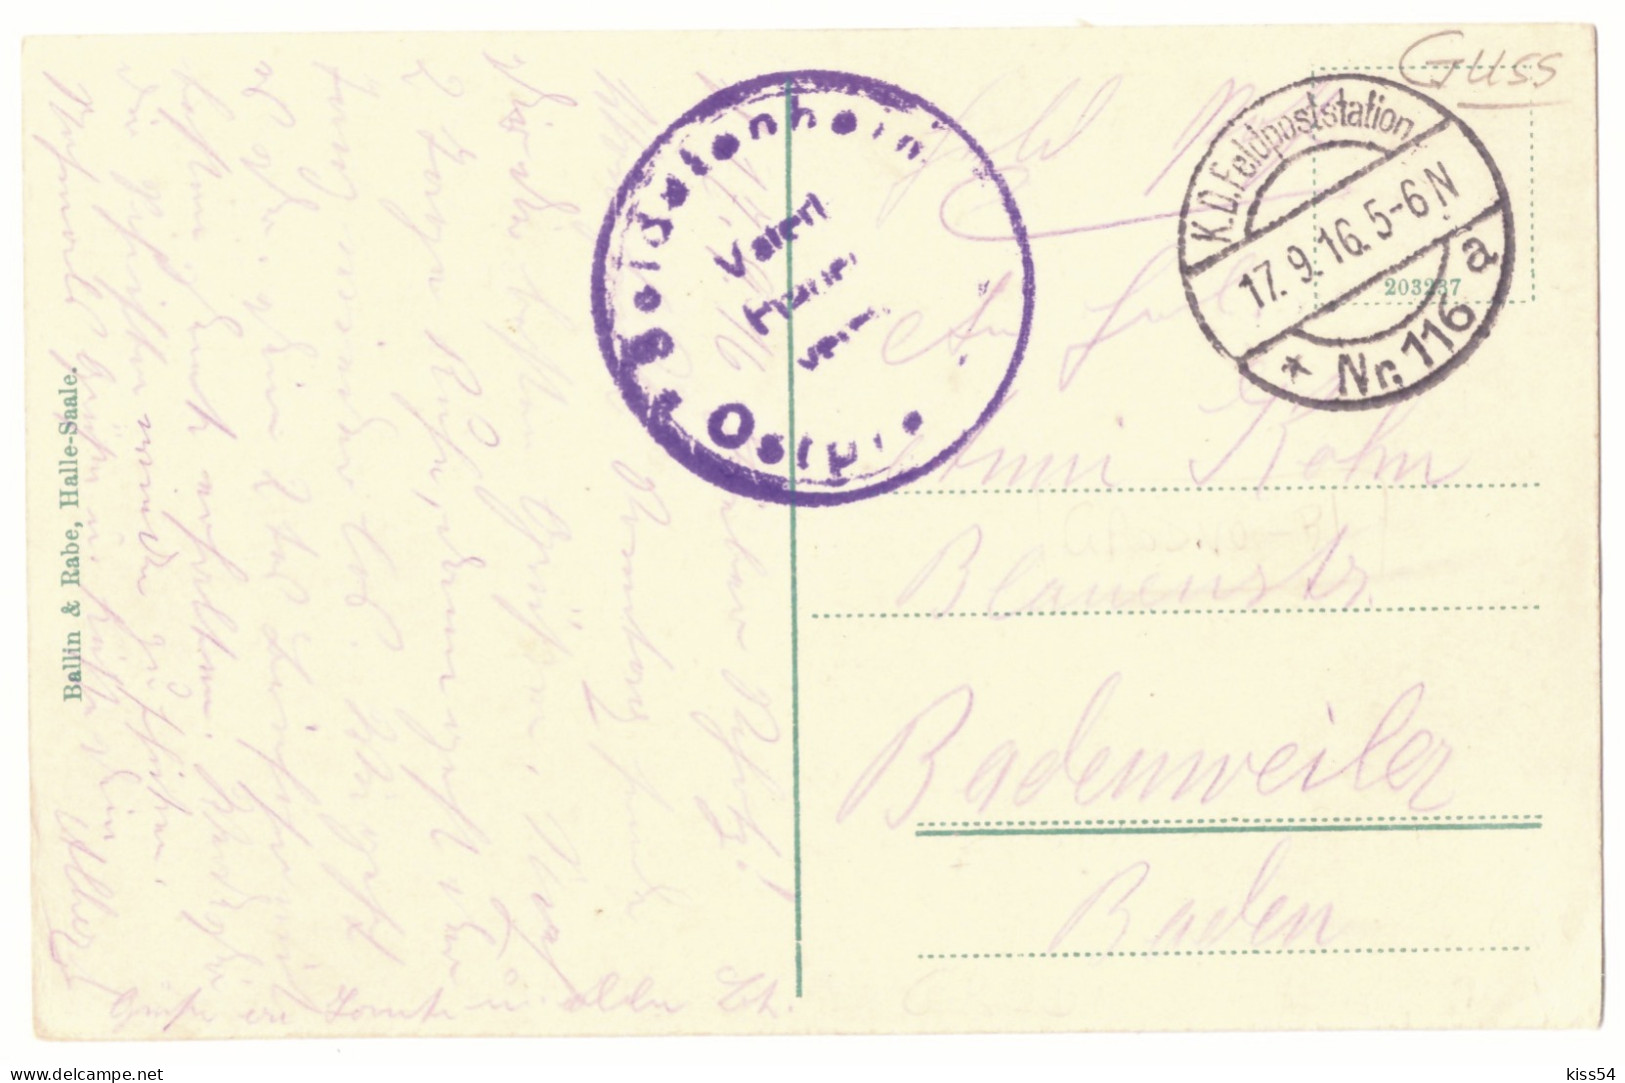 BL 32 - 25089 GRODNO, Panorama, Belarus - Old Postcard, CENSOR - Used - 1916 - Weißrussland